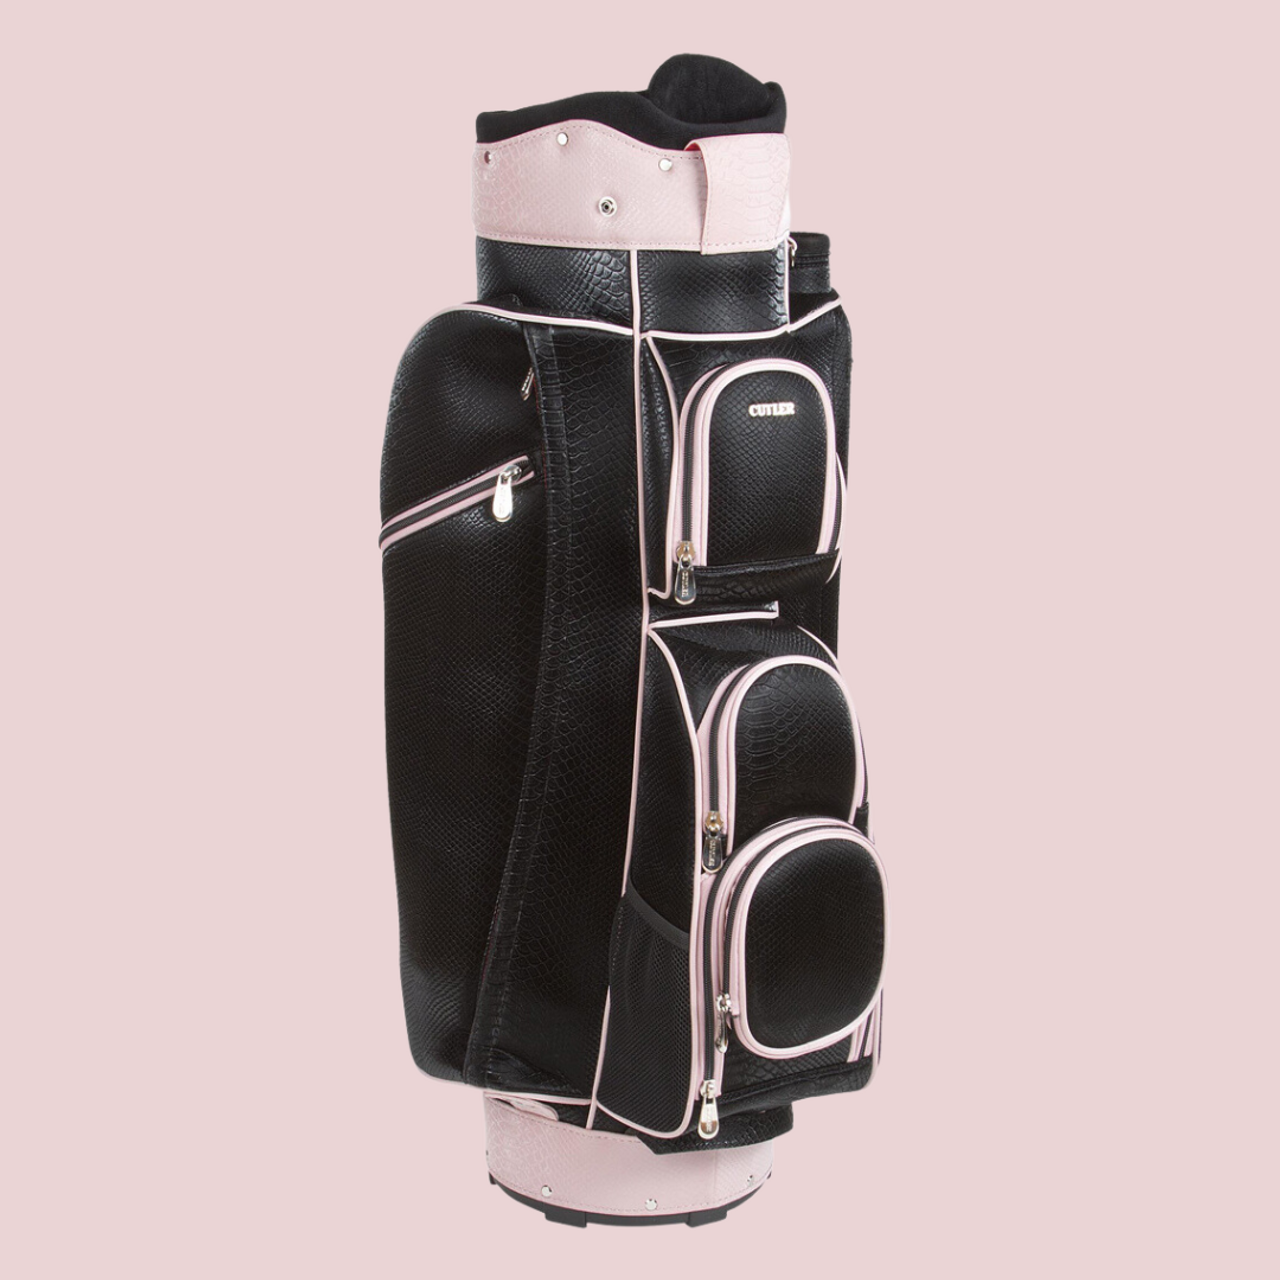 Licorice Golf Bag